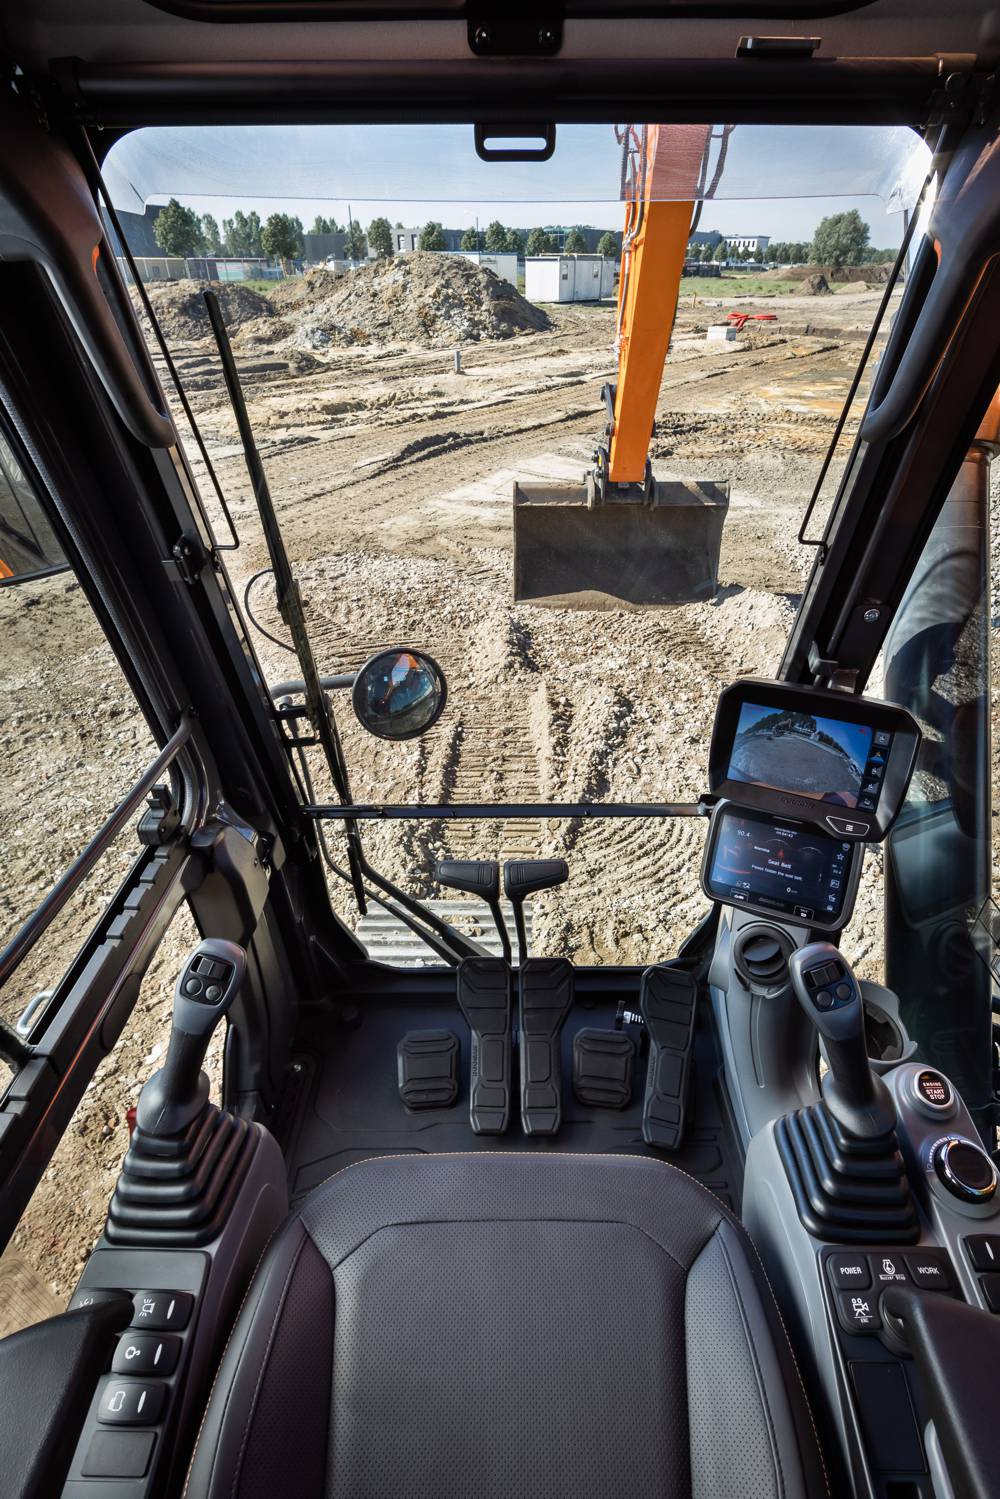 Doosan unearths new medium-sized DX225LC-7 Crawler Excavator